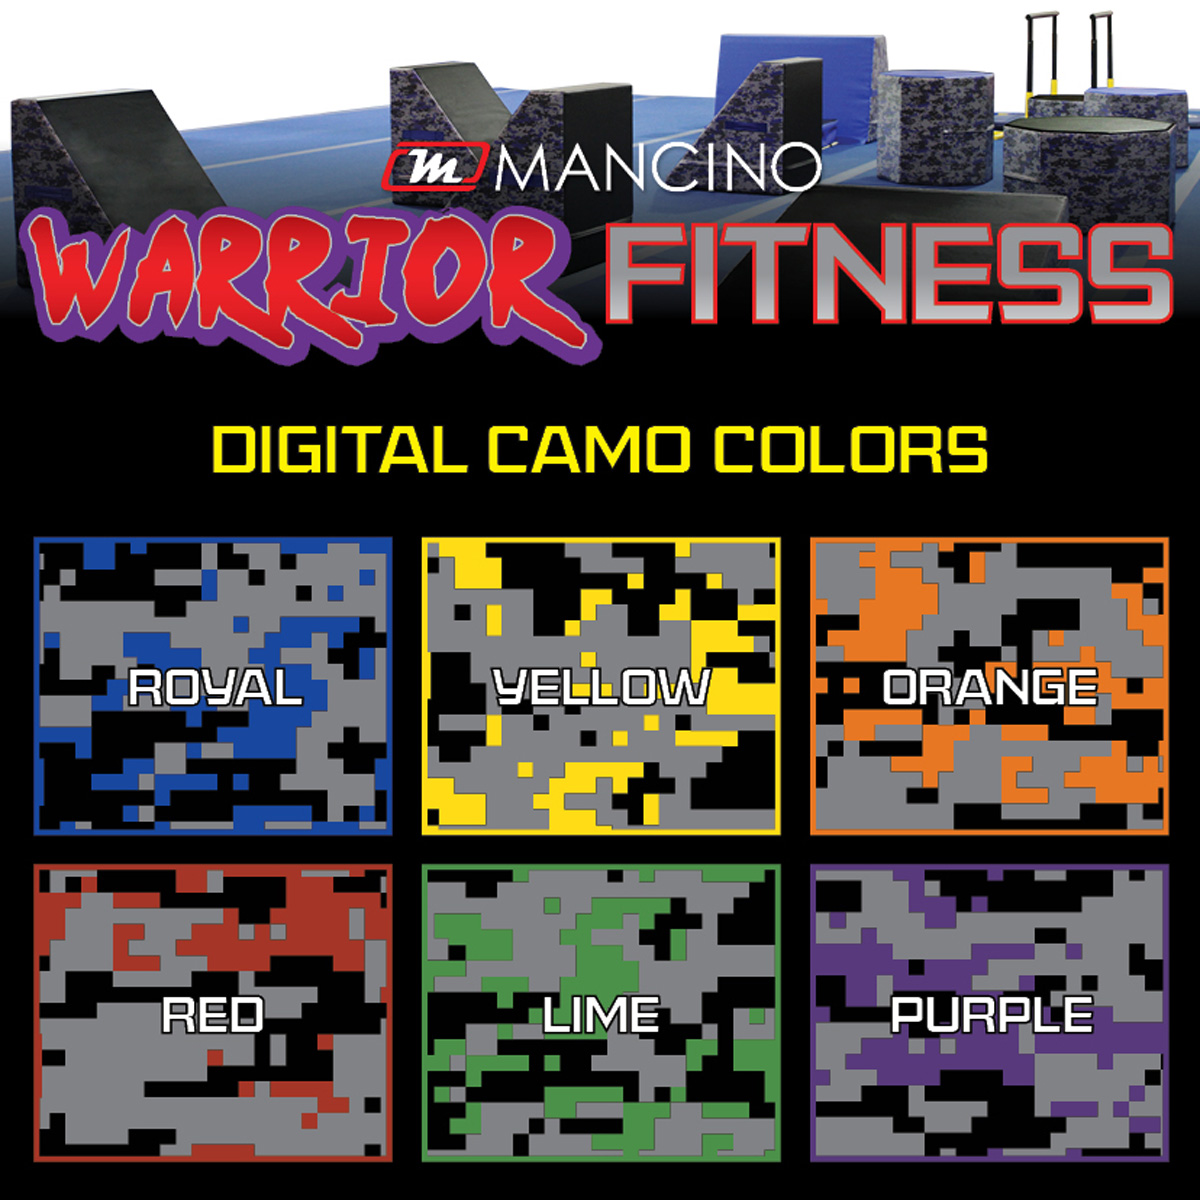 warrior fitness camo color options